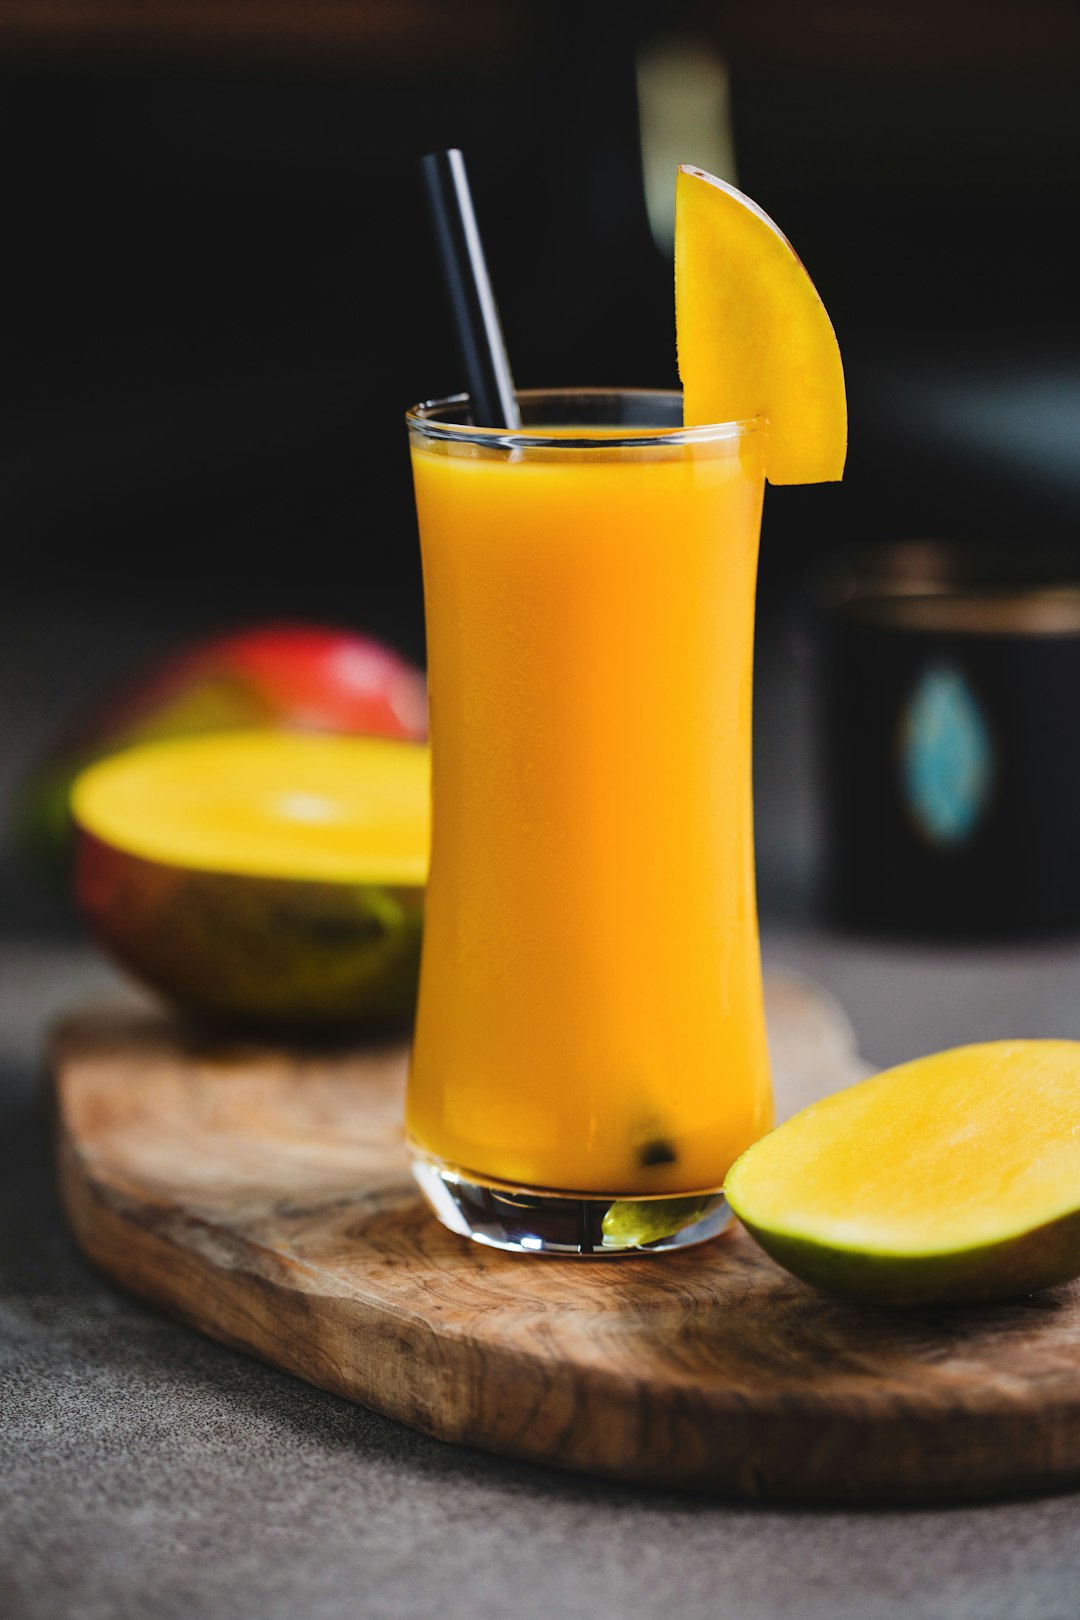 At Home How To Make Mango Juice From Pekanbaru City